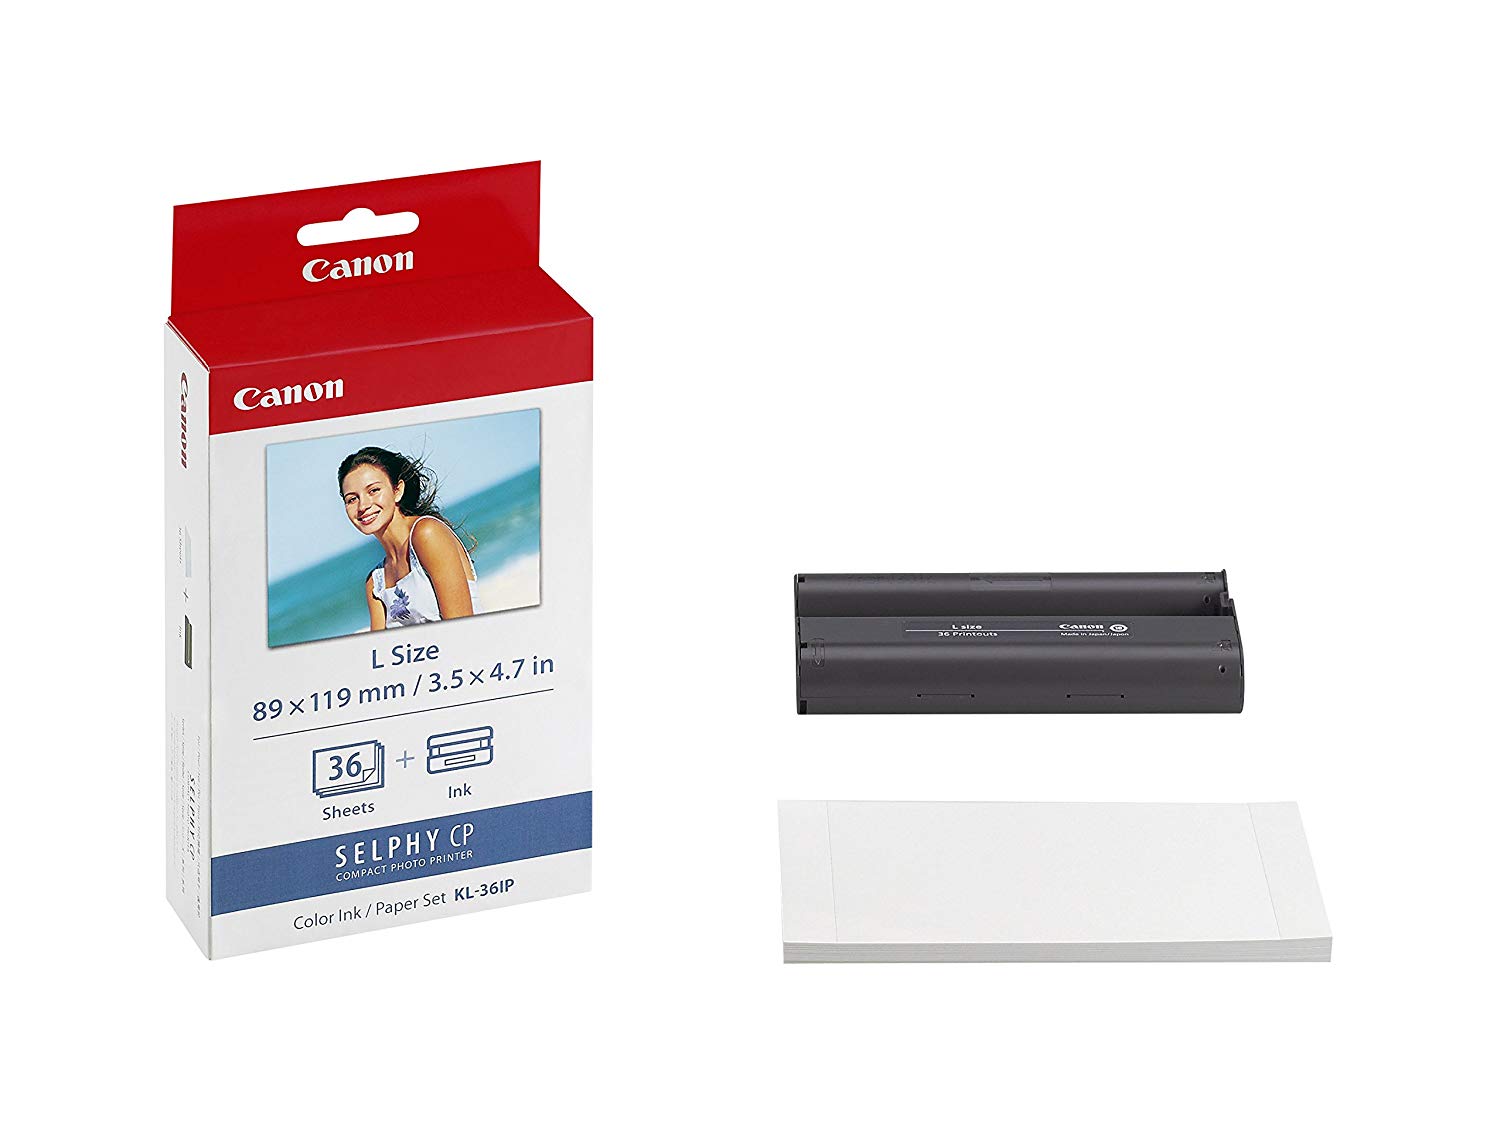 Canon Ink Cassette/Paper Set KL-36IP